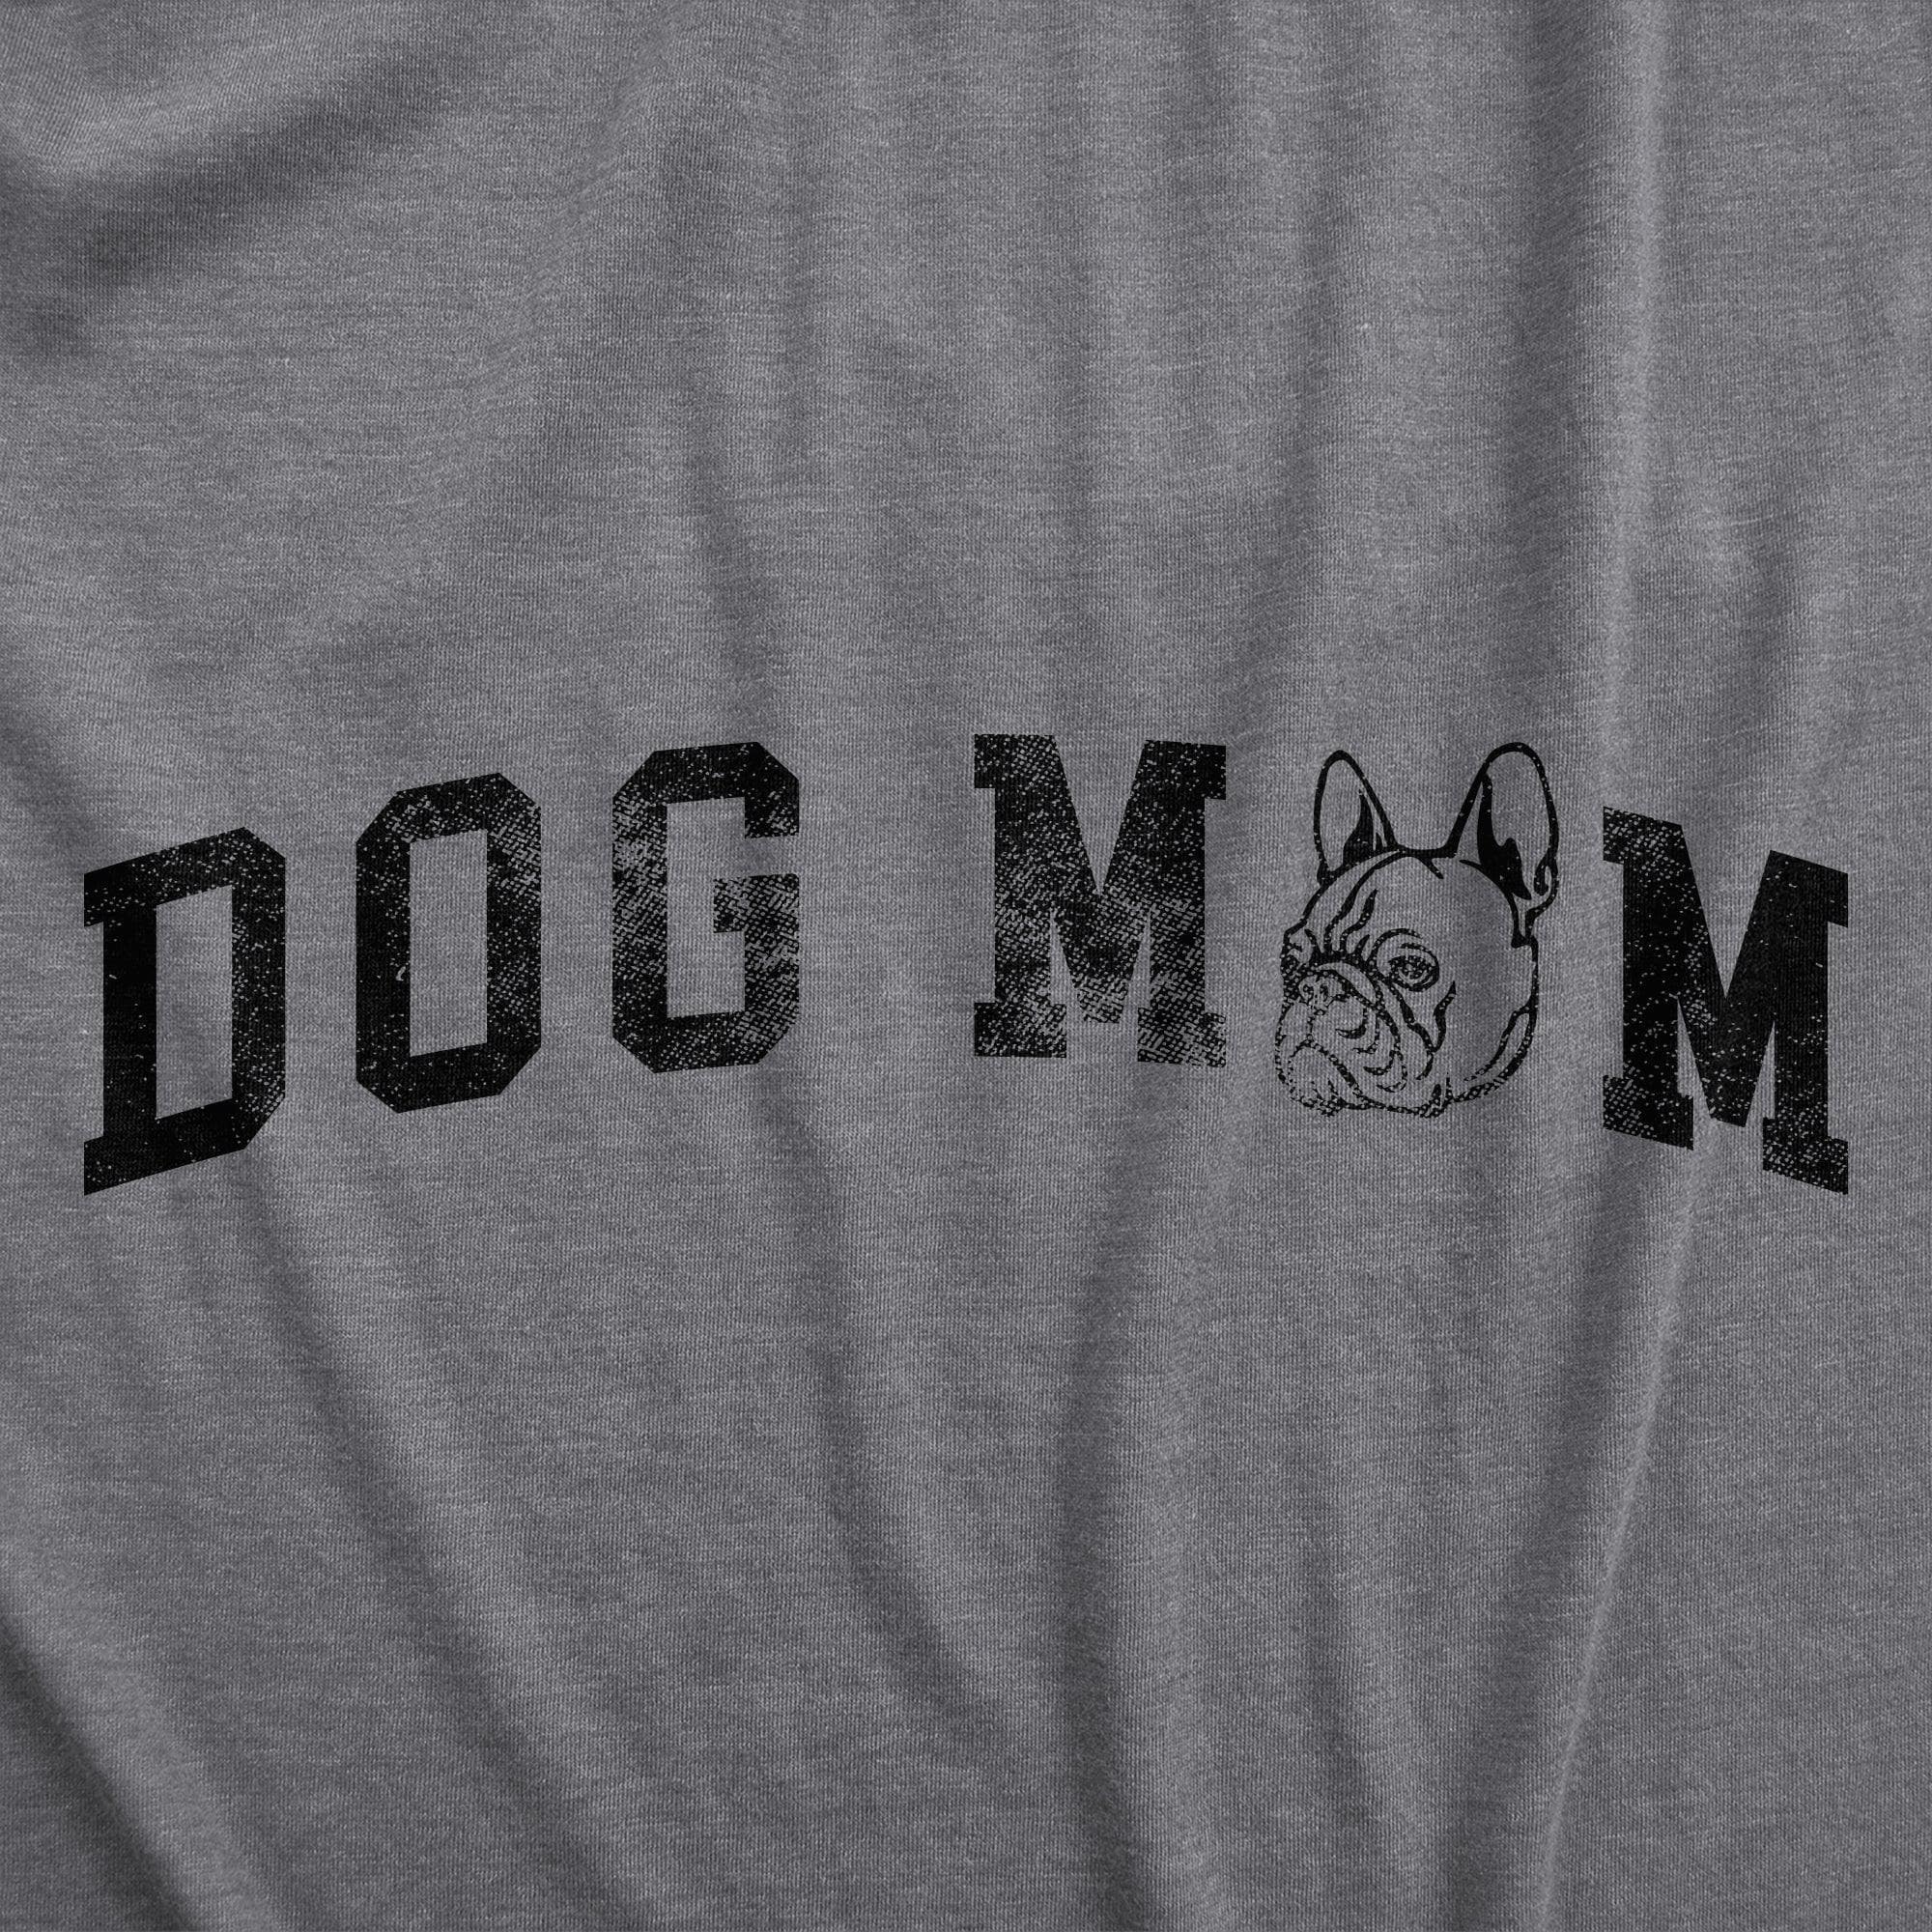 Dog Mom French Bulldog Women's Tshirt  -  Crazy Dog T-Shirts